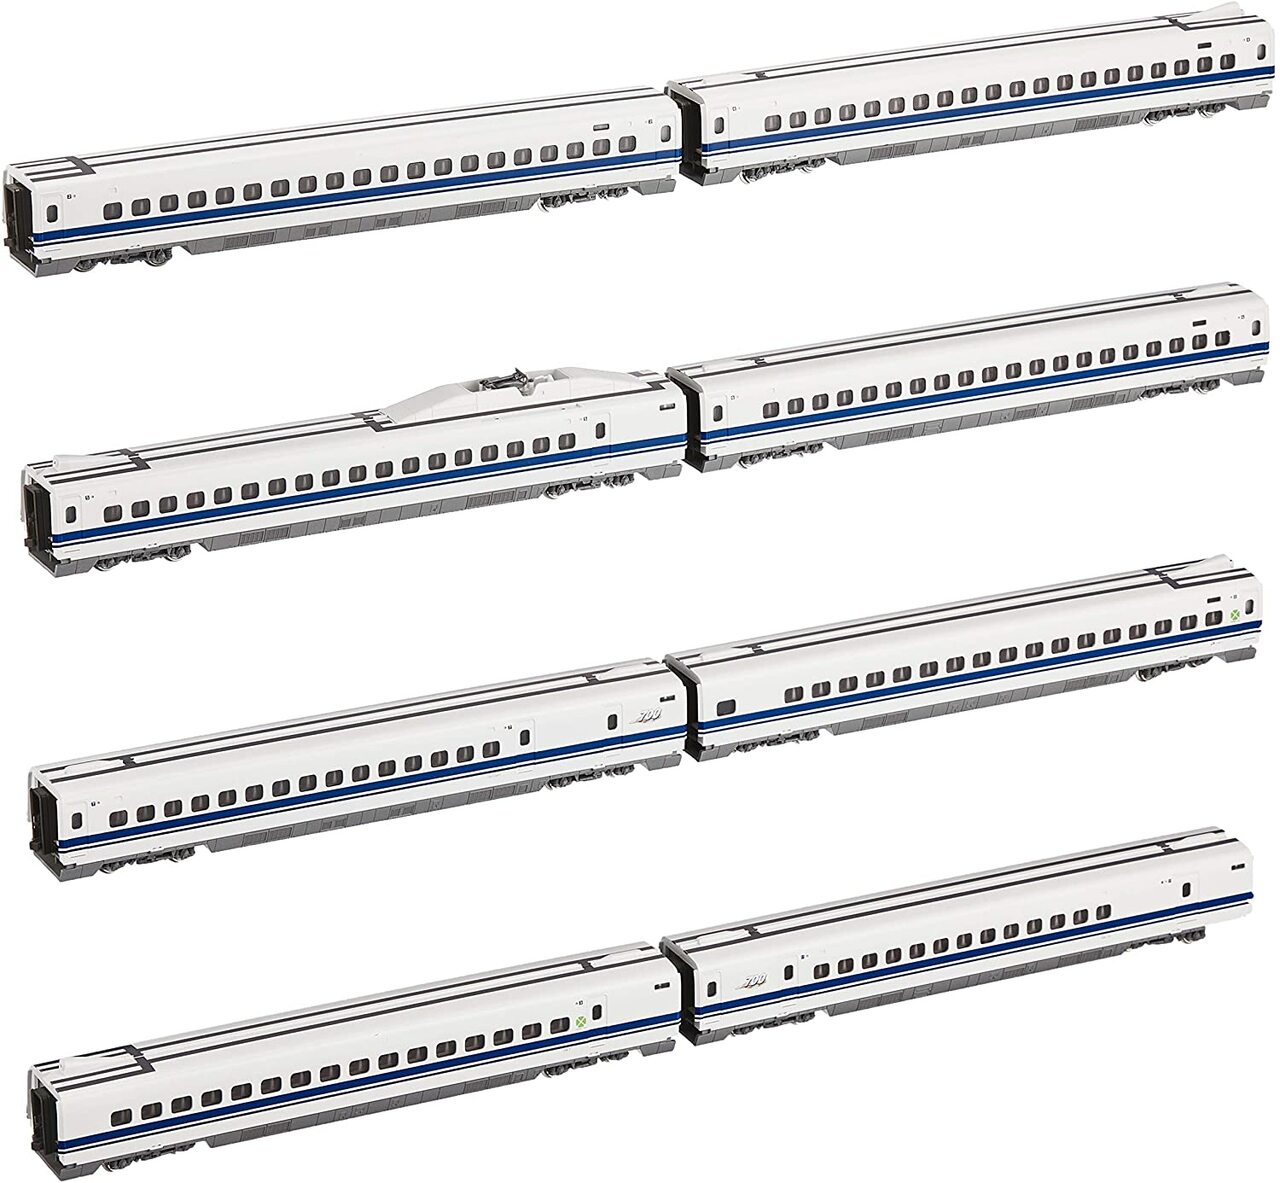 N Scale - Kato - 10-1646 - Passenger Train, Electric, Series 700 - Japan Railways West - 8-Pack Add-On Set